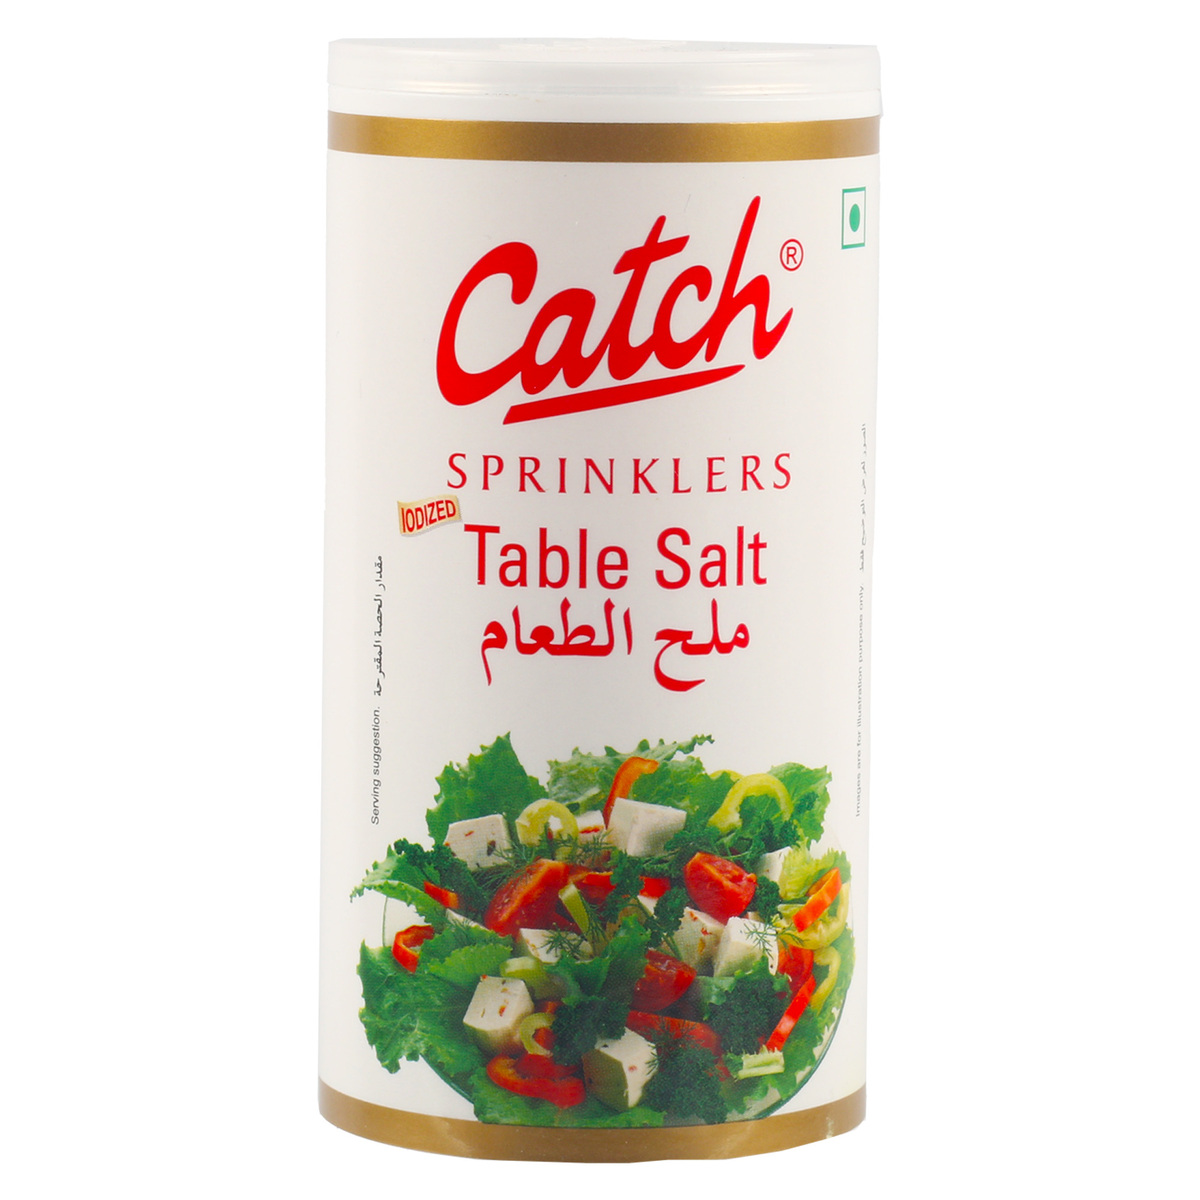 Catch Table Salt Sprinklers 200 g